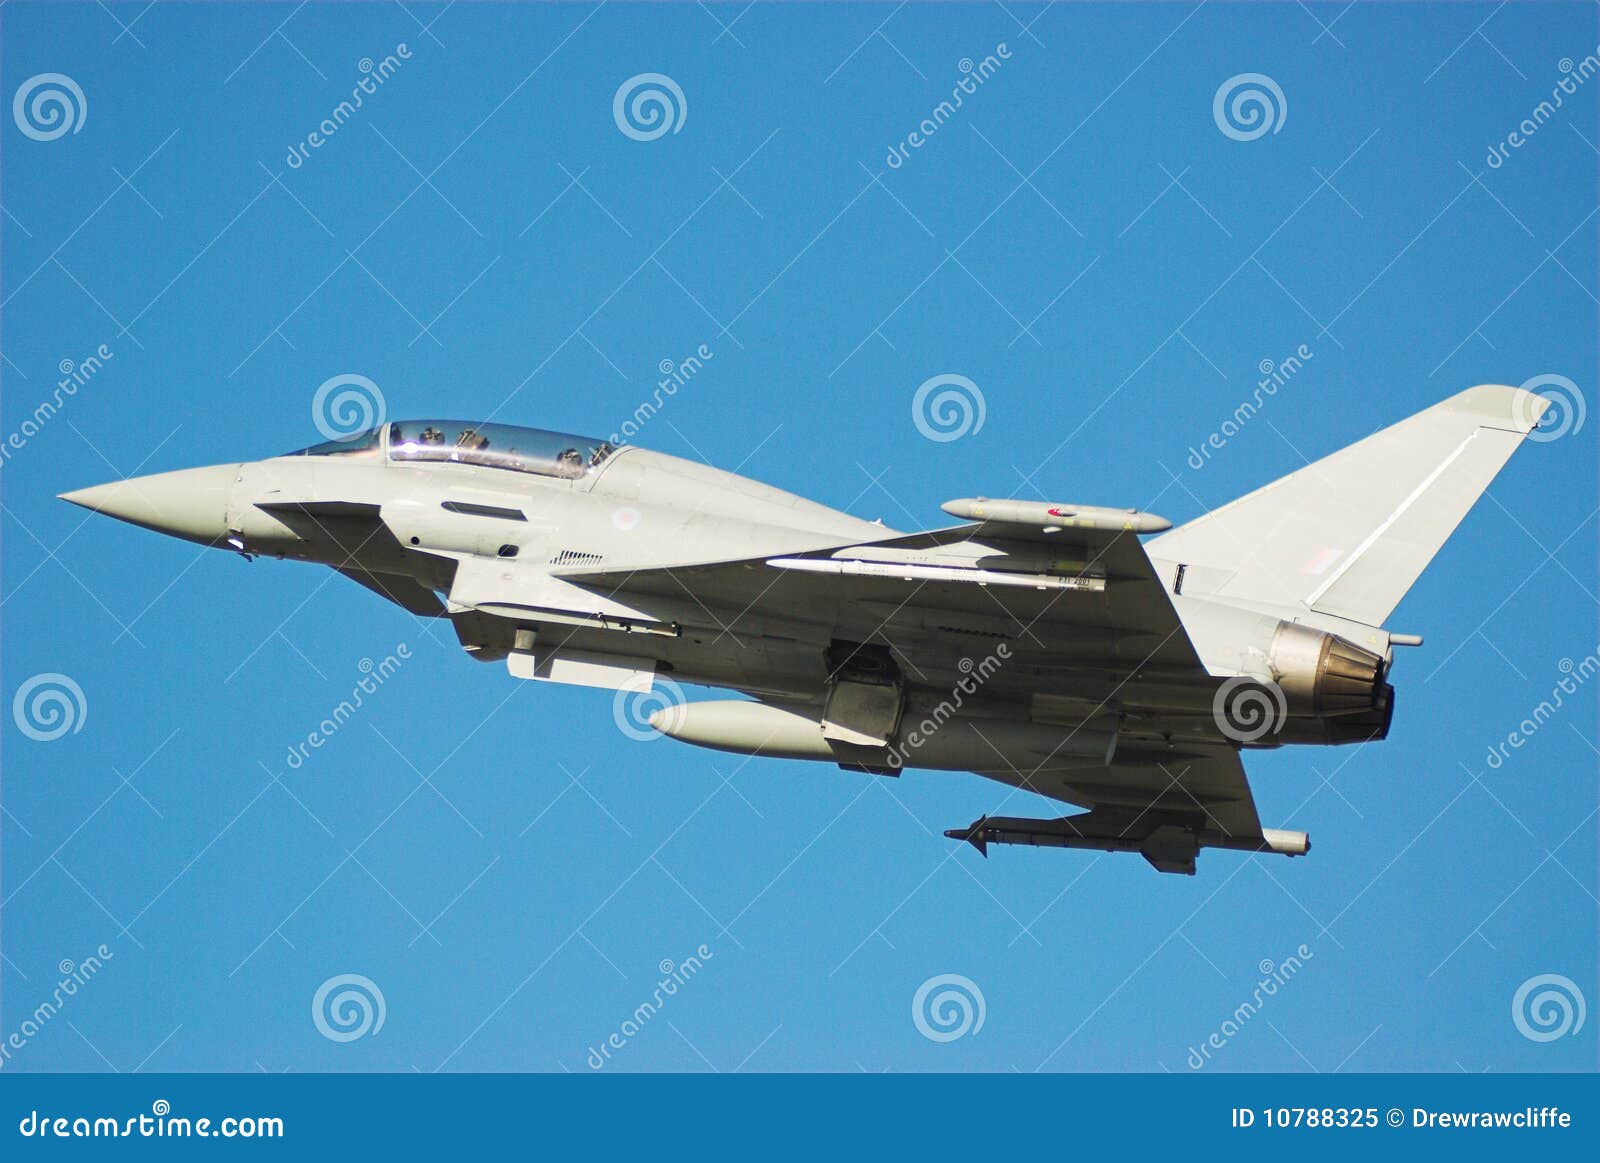 eurofighter clipart - photo #23